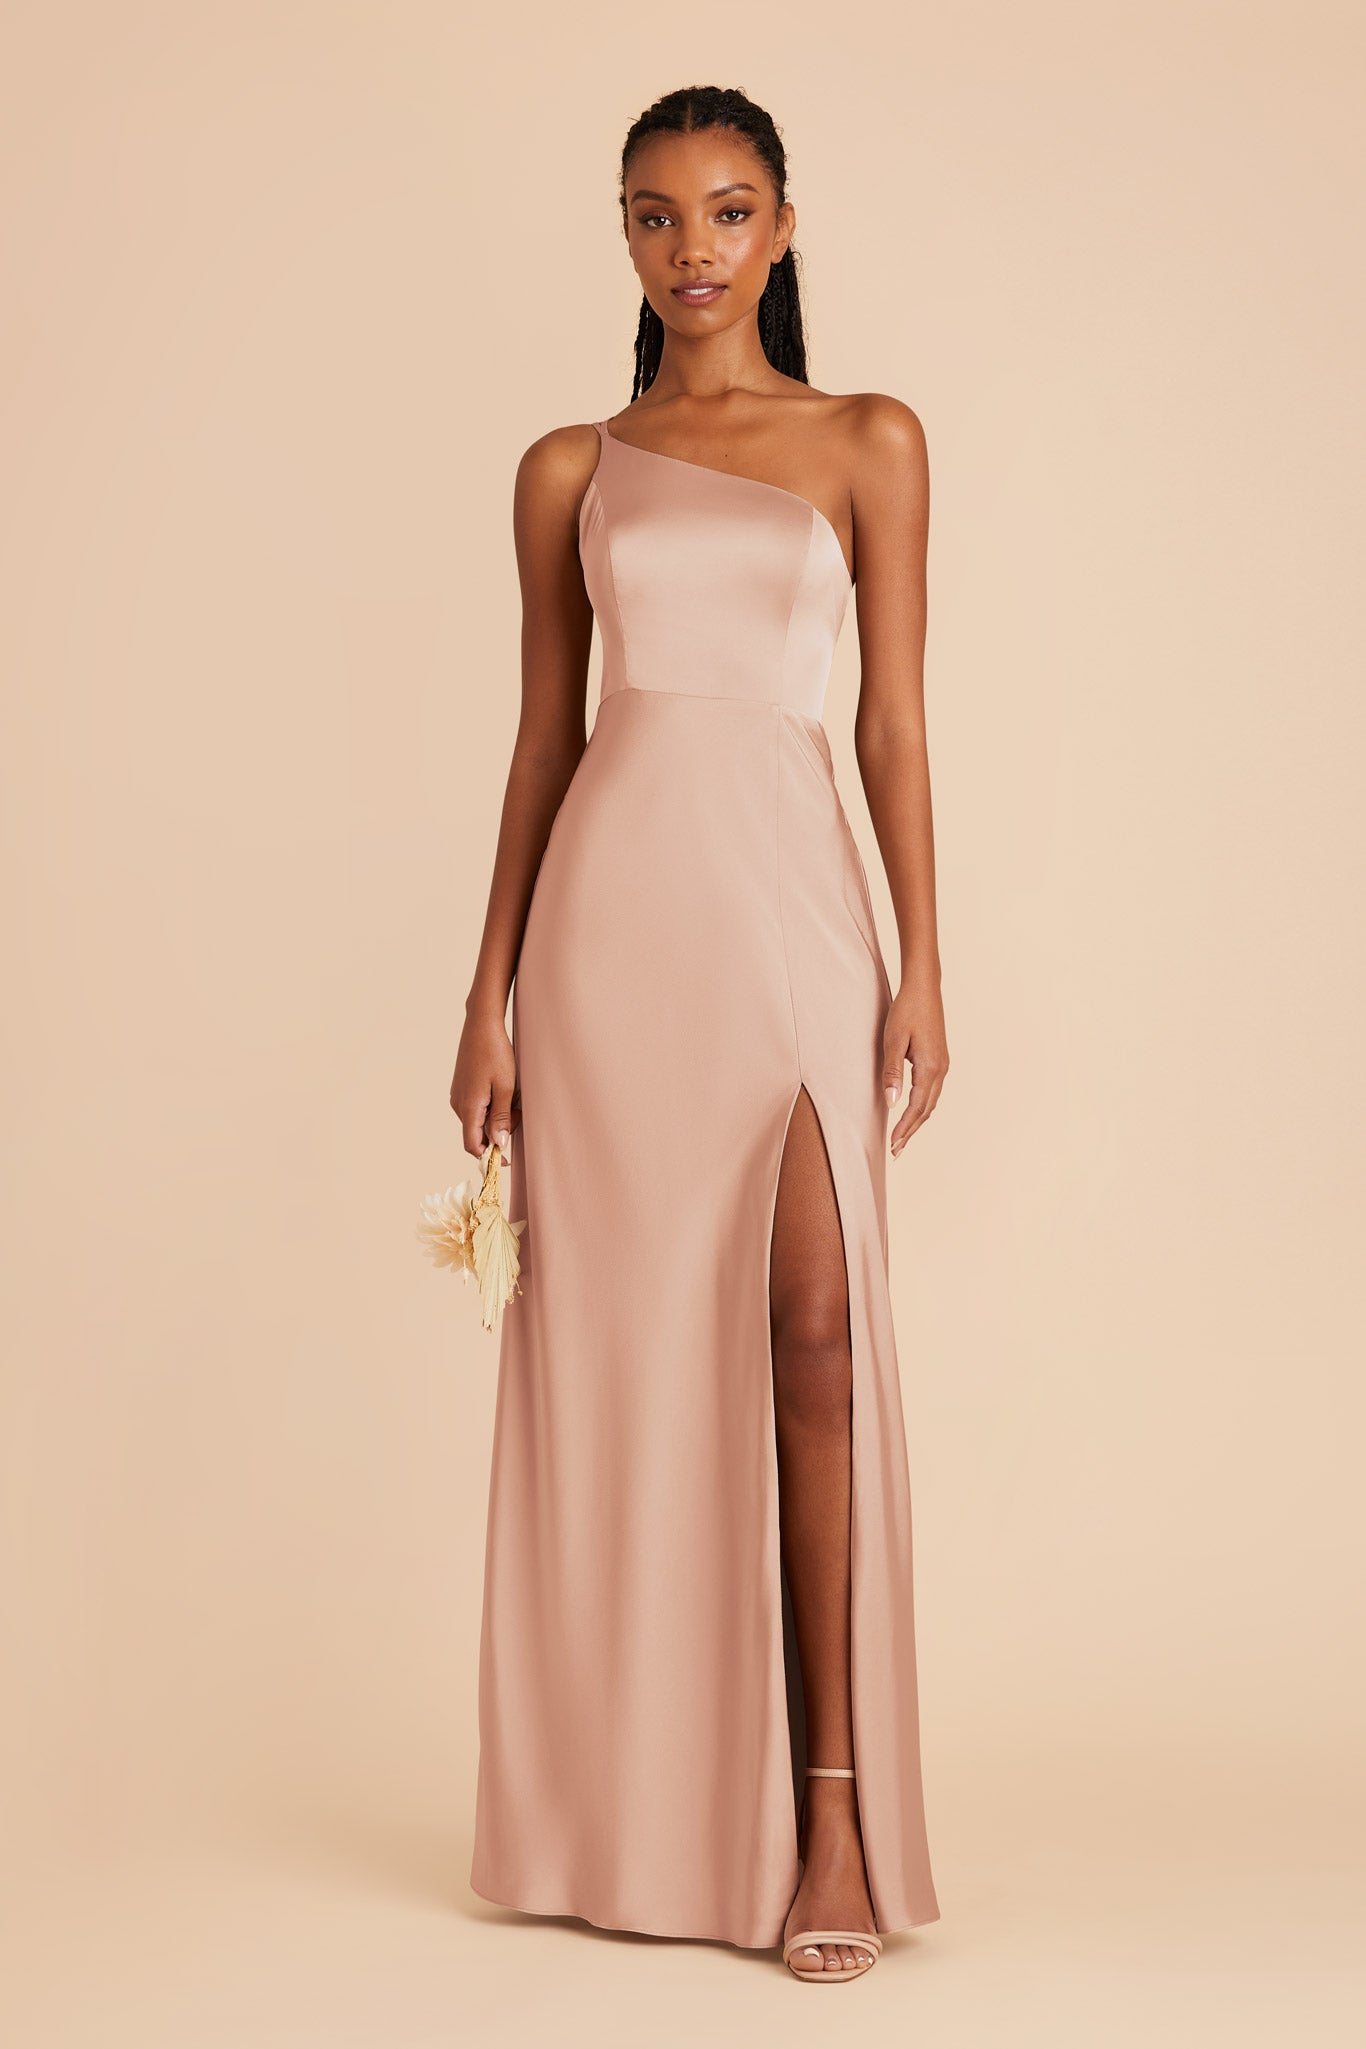 Rose Gold Kensie Matte Satin Dress by Birdy Grey